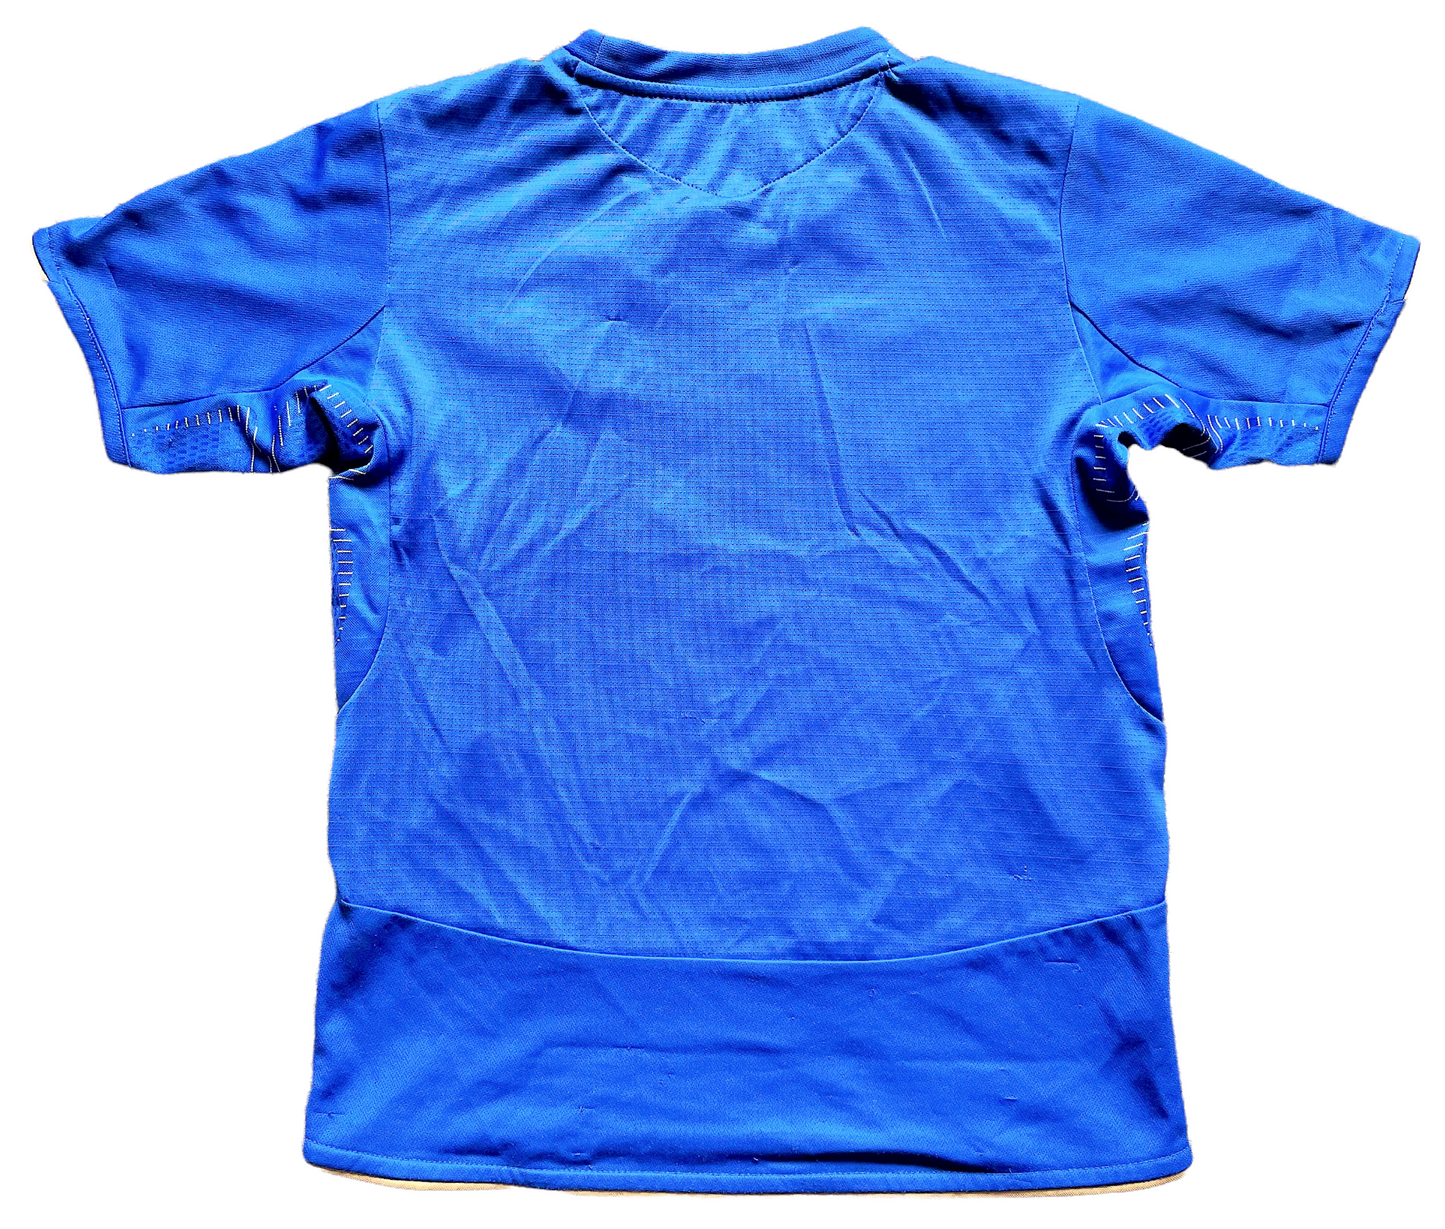 Chelsea Home Shirt 2005 (good) Medium Boys. Height 18 inches